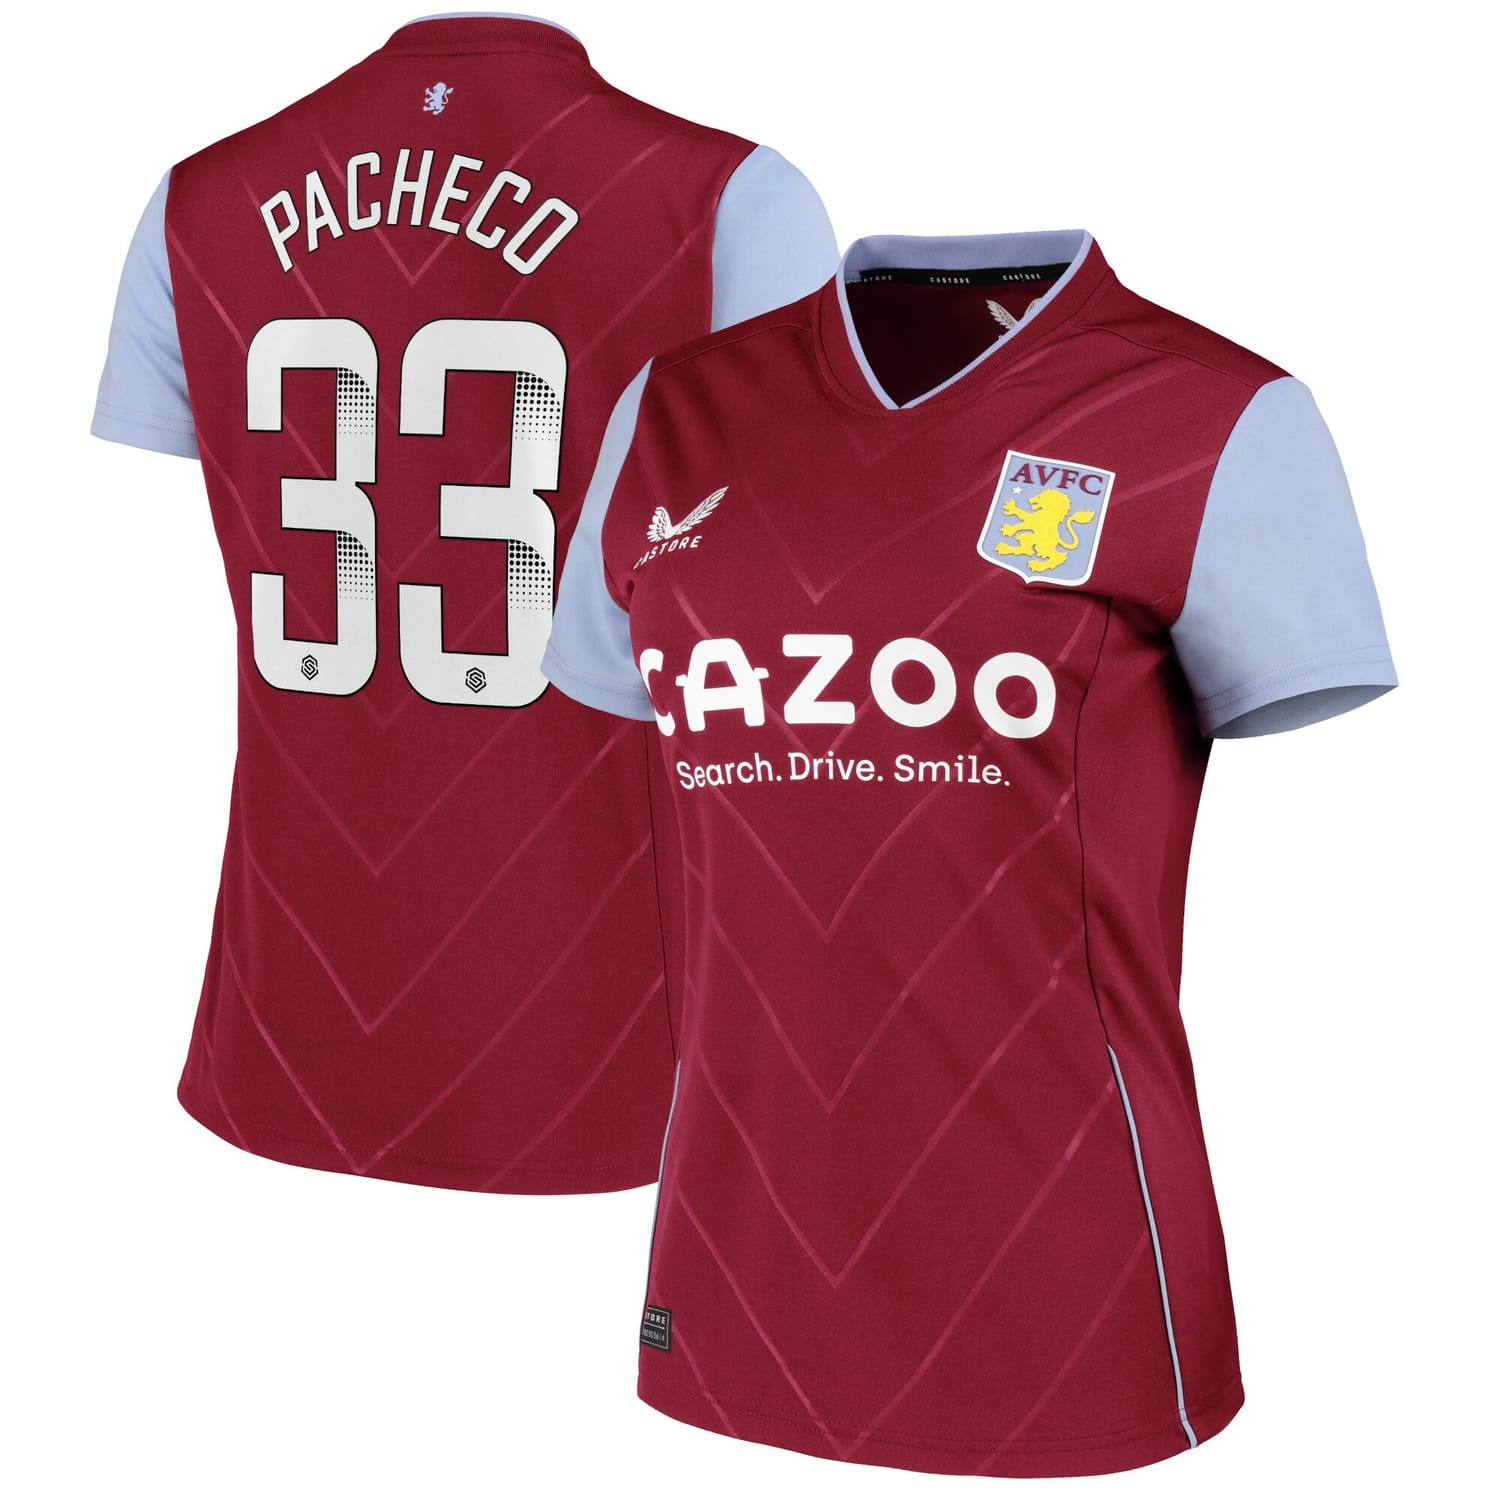 Premier League Aston Villa Home WSL Jersey Shirt 2022-23 player Mayumi Pacheco 33 printing for Women